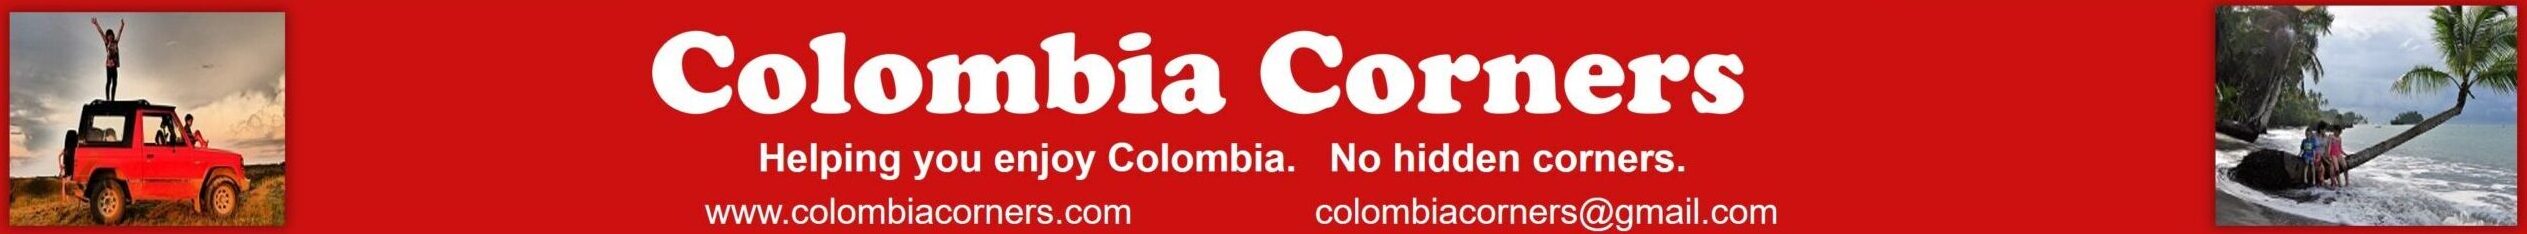 Colombia Corners